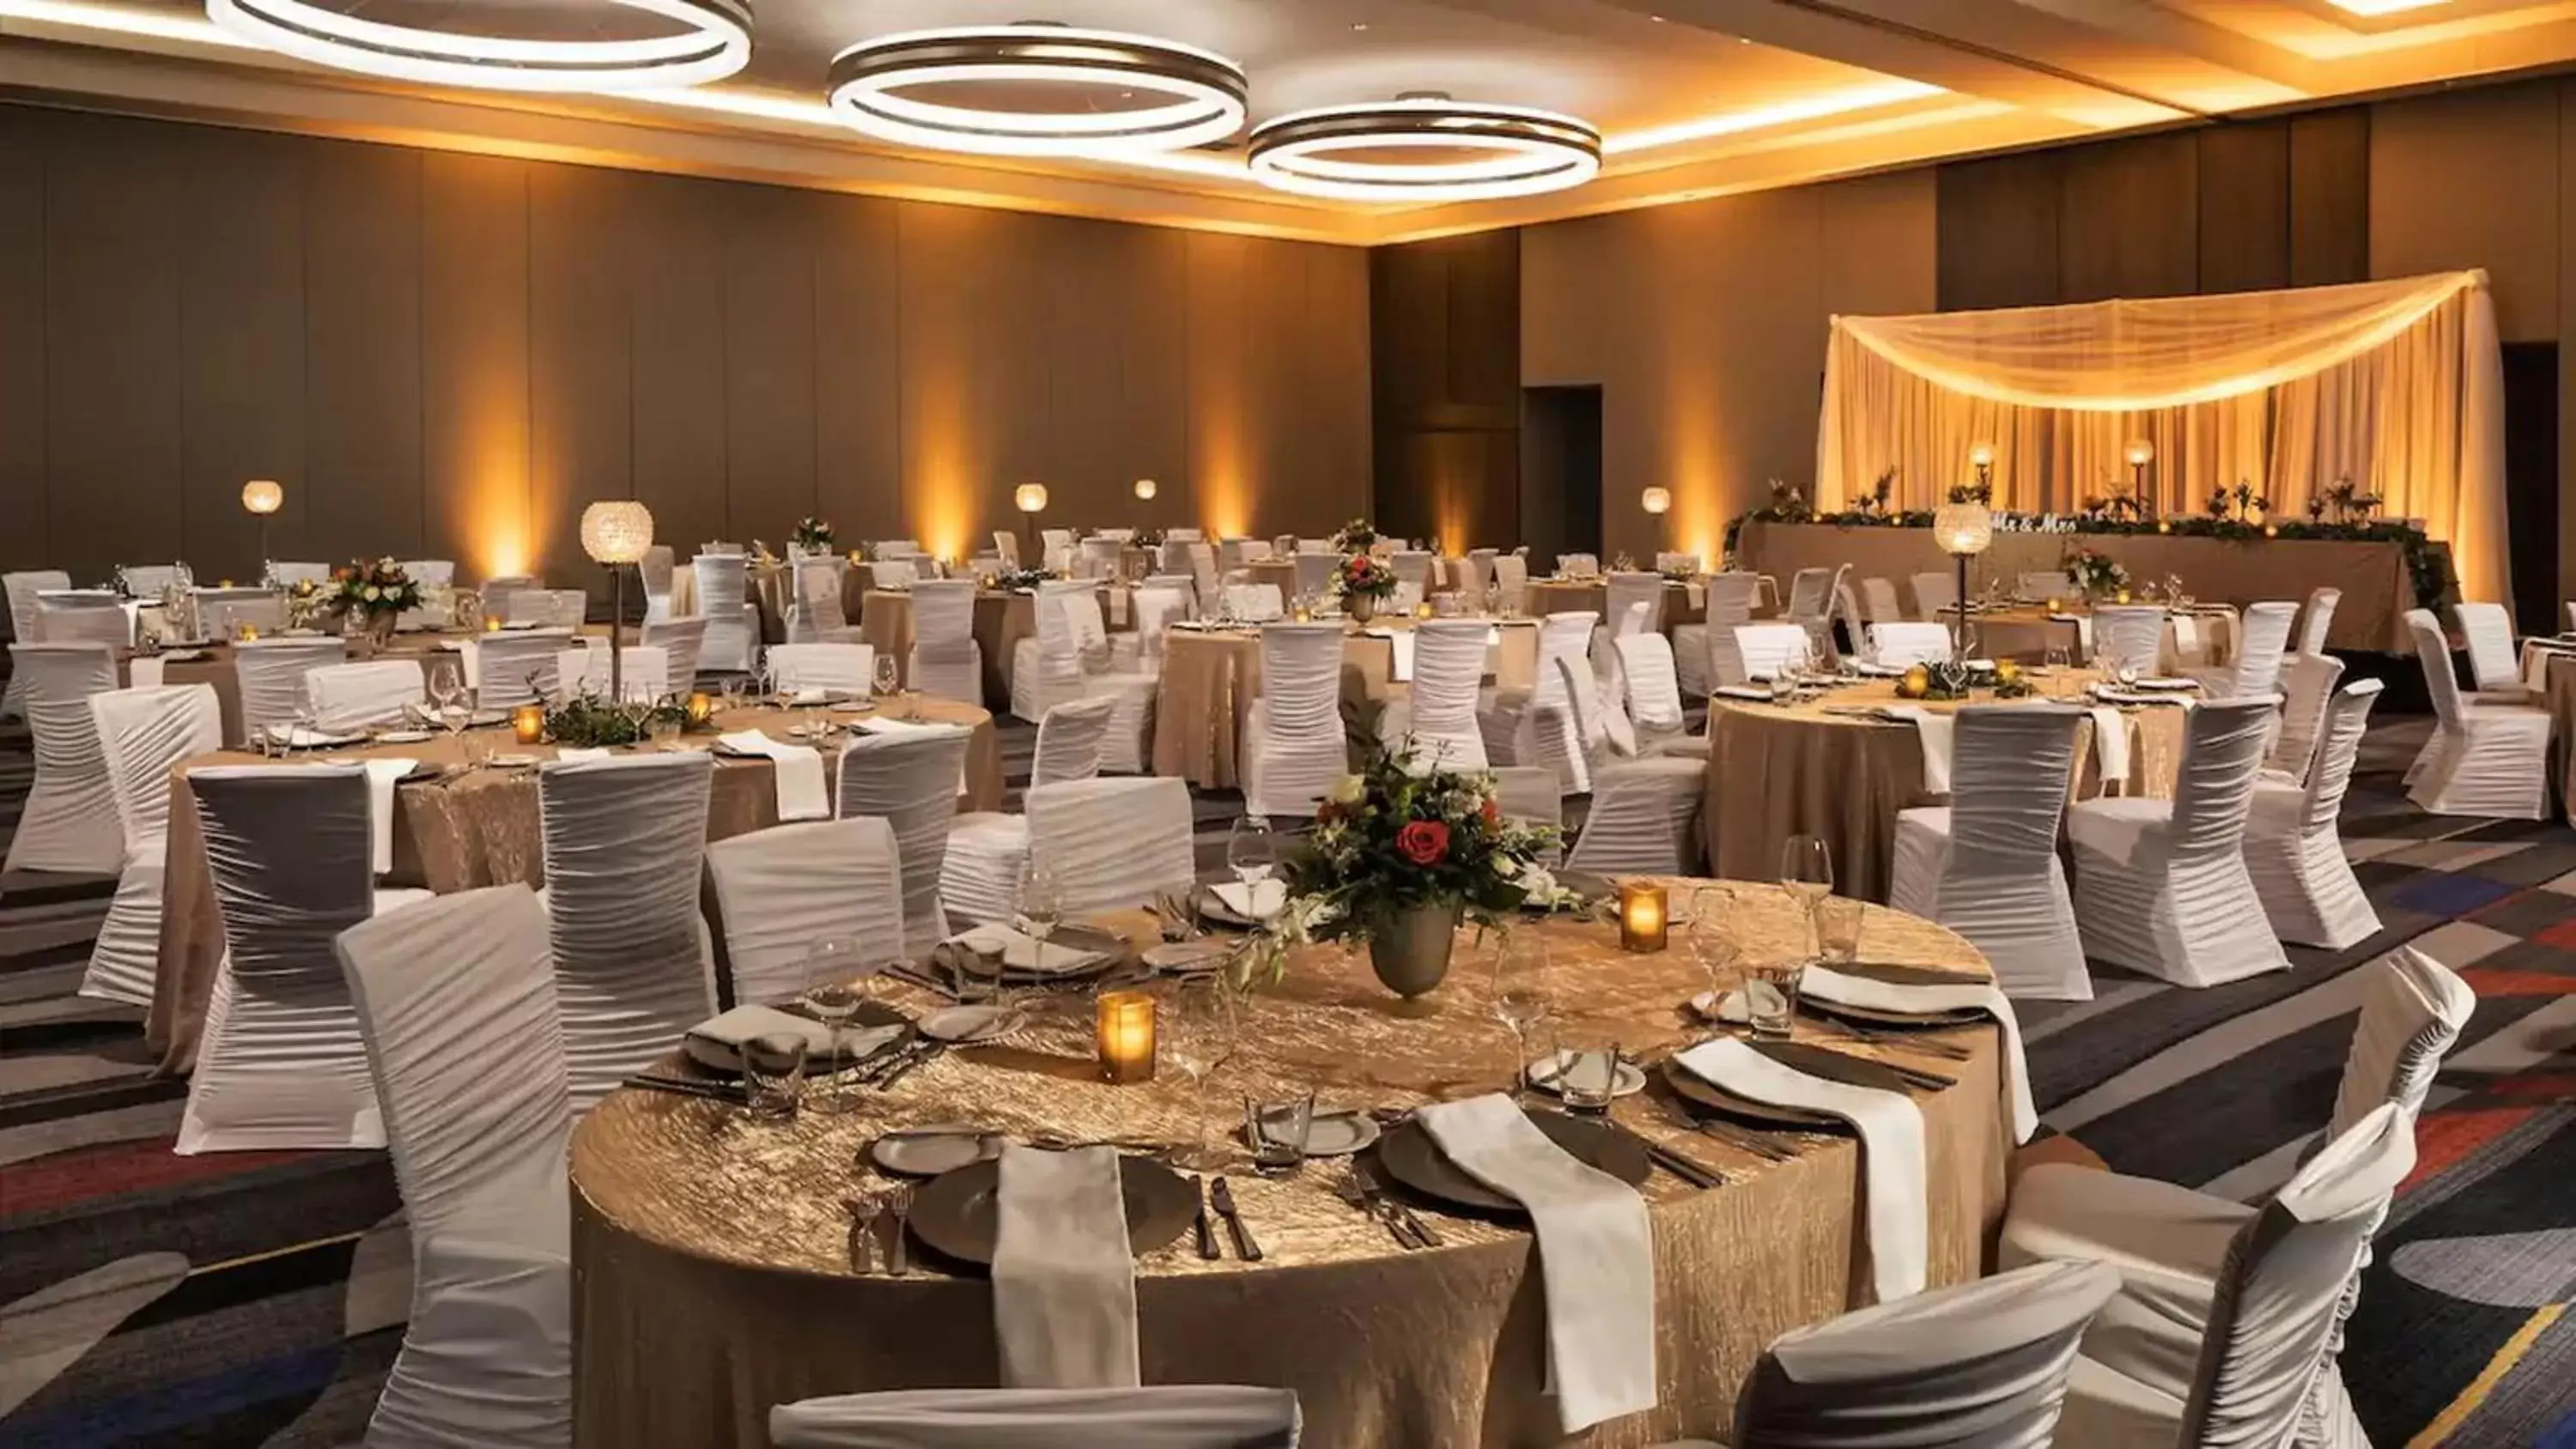 Banquet/Function facilities, Banquet Facilities in Hyatt Regency Bloomington - Minneapolis